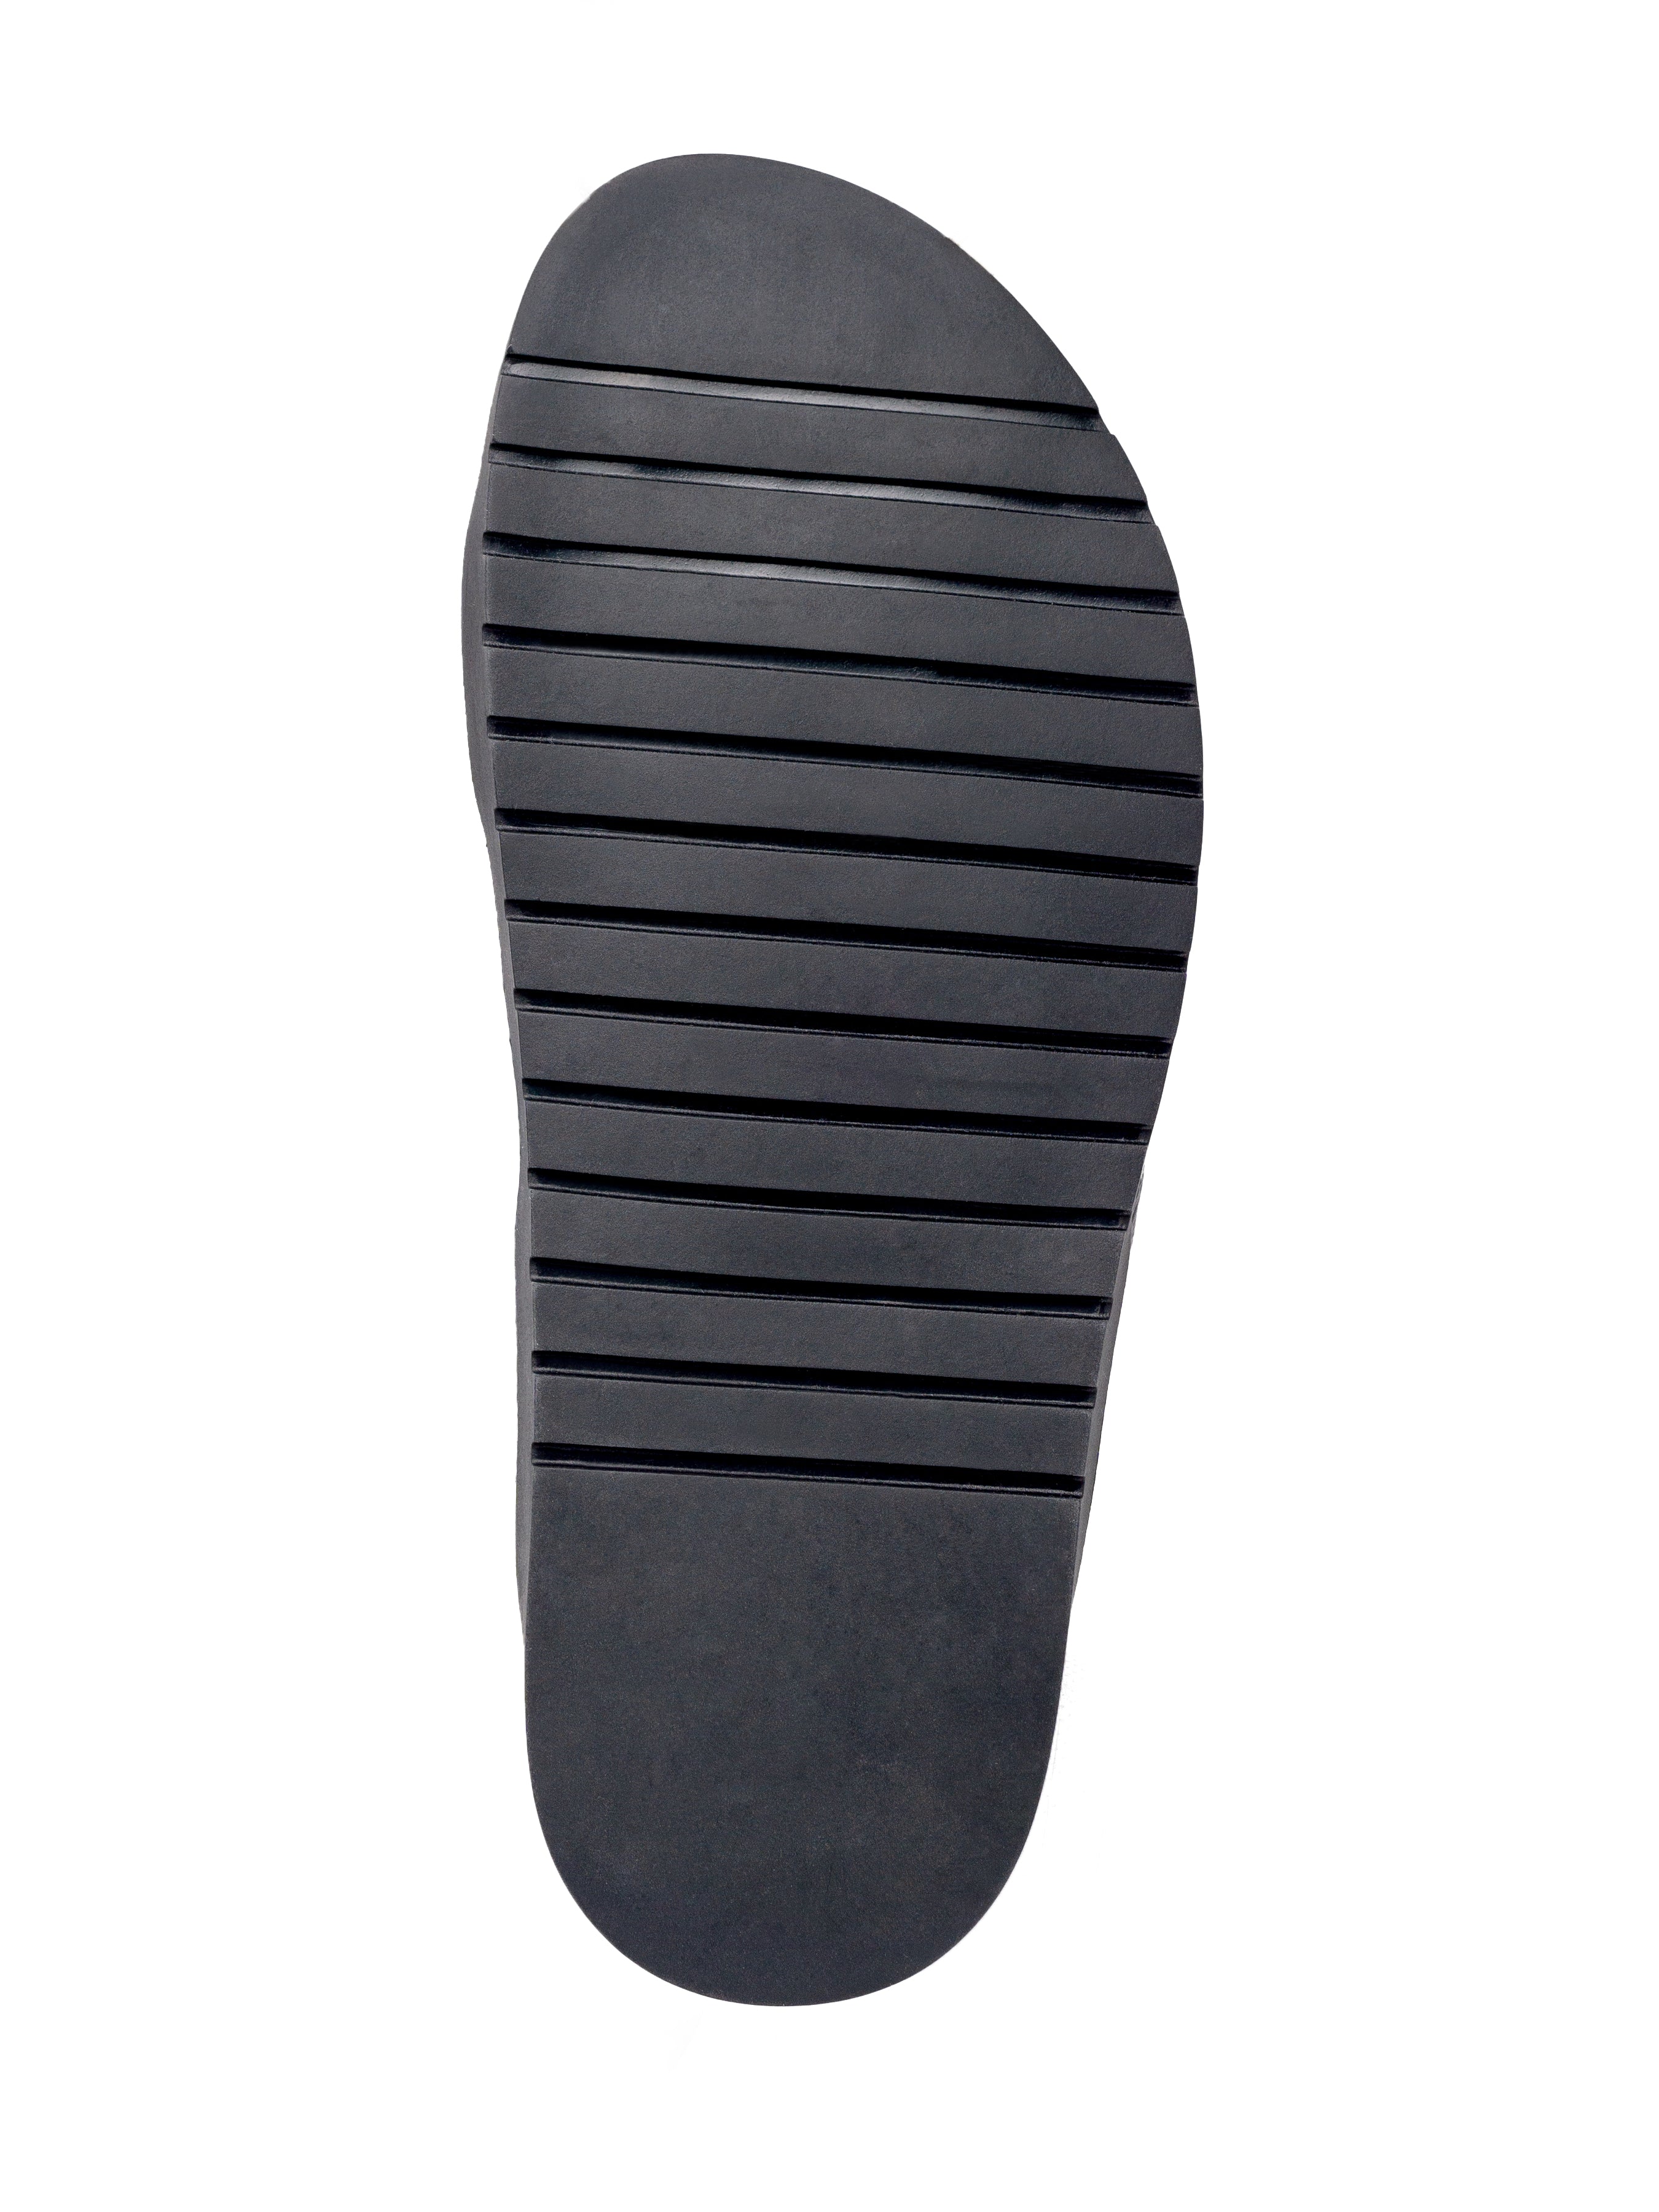 Cross Strap Riliv Sandal - Black Croco Leather